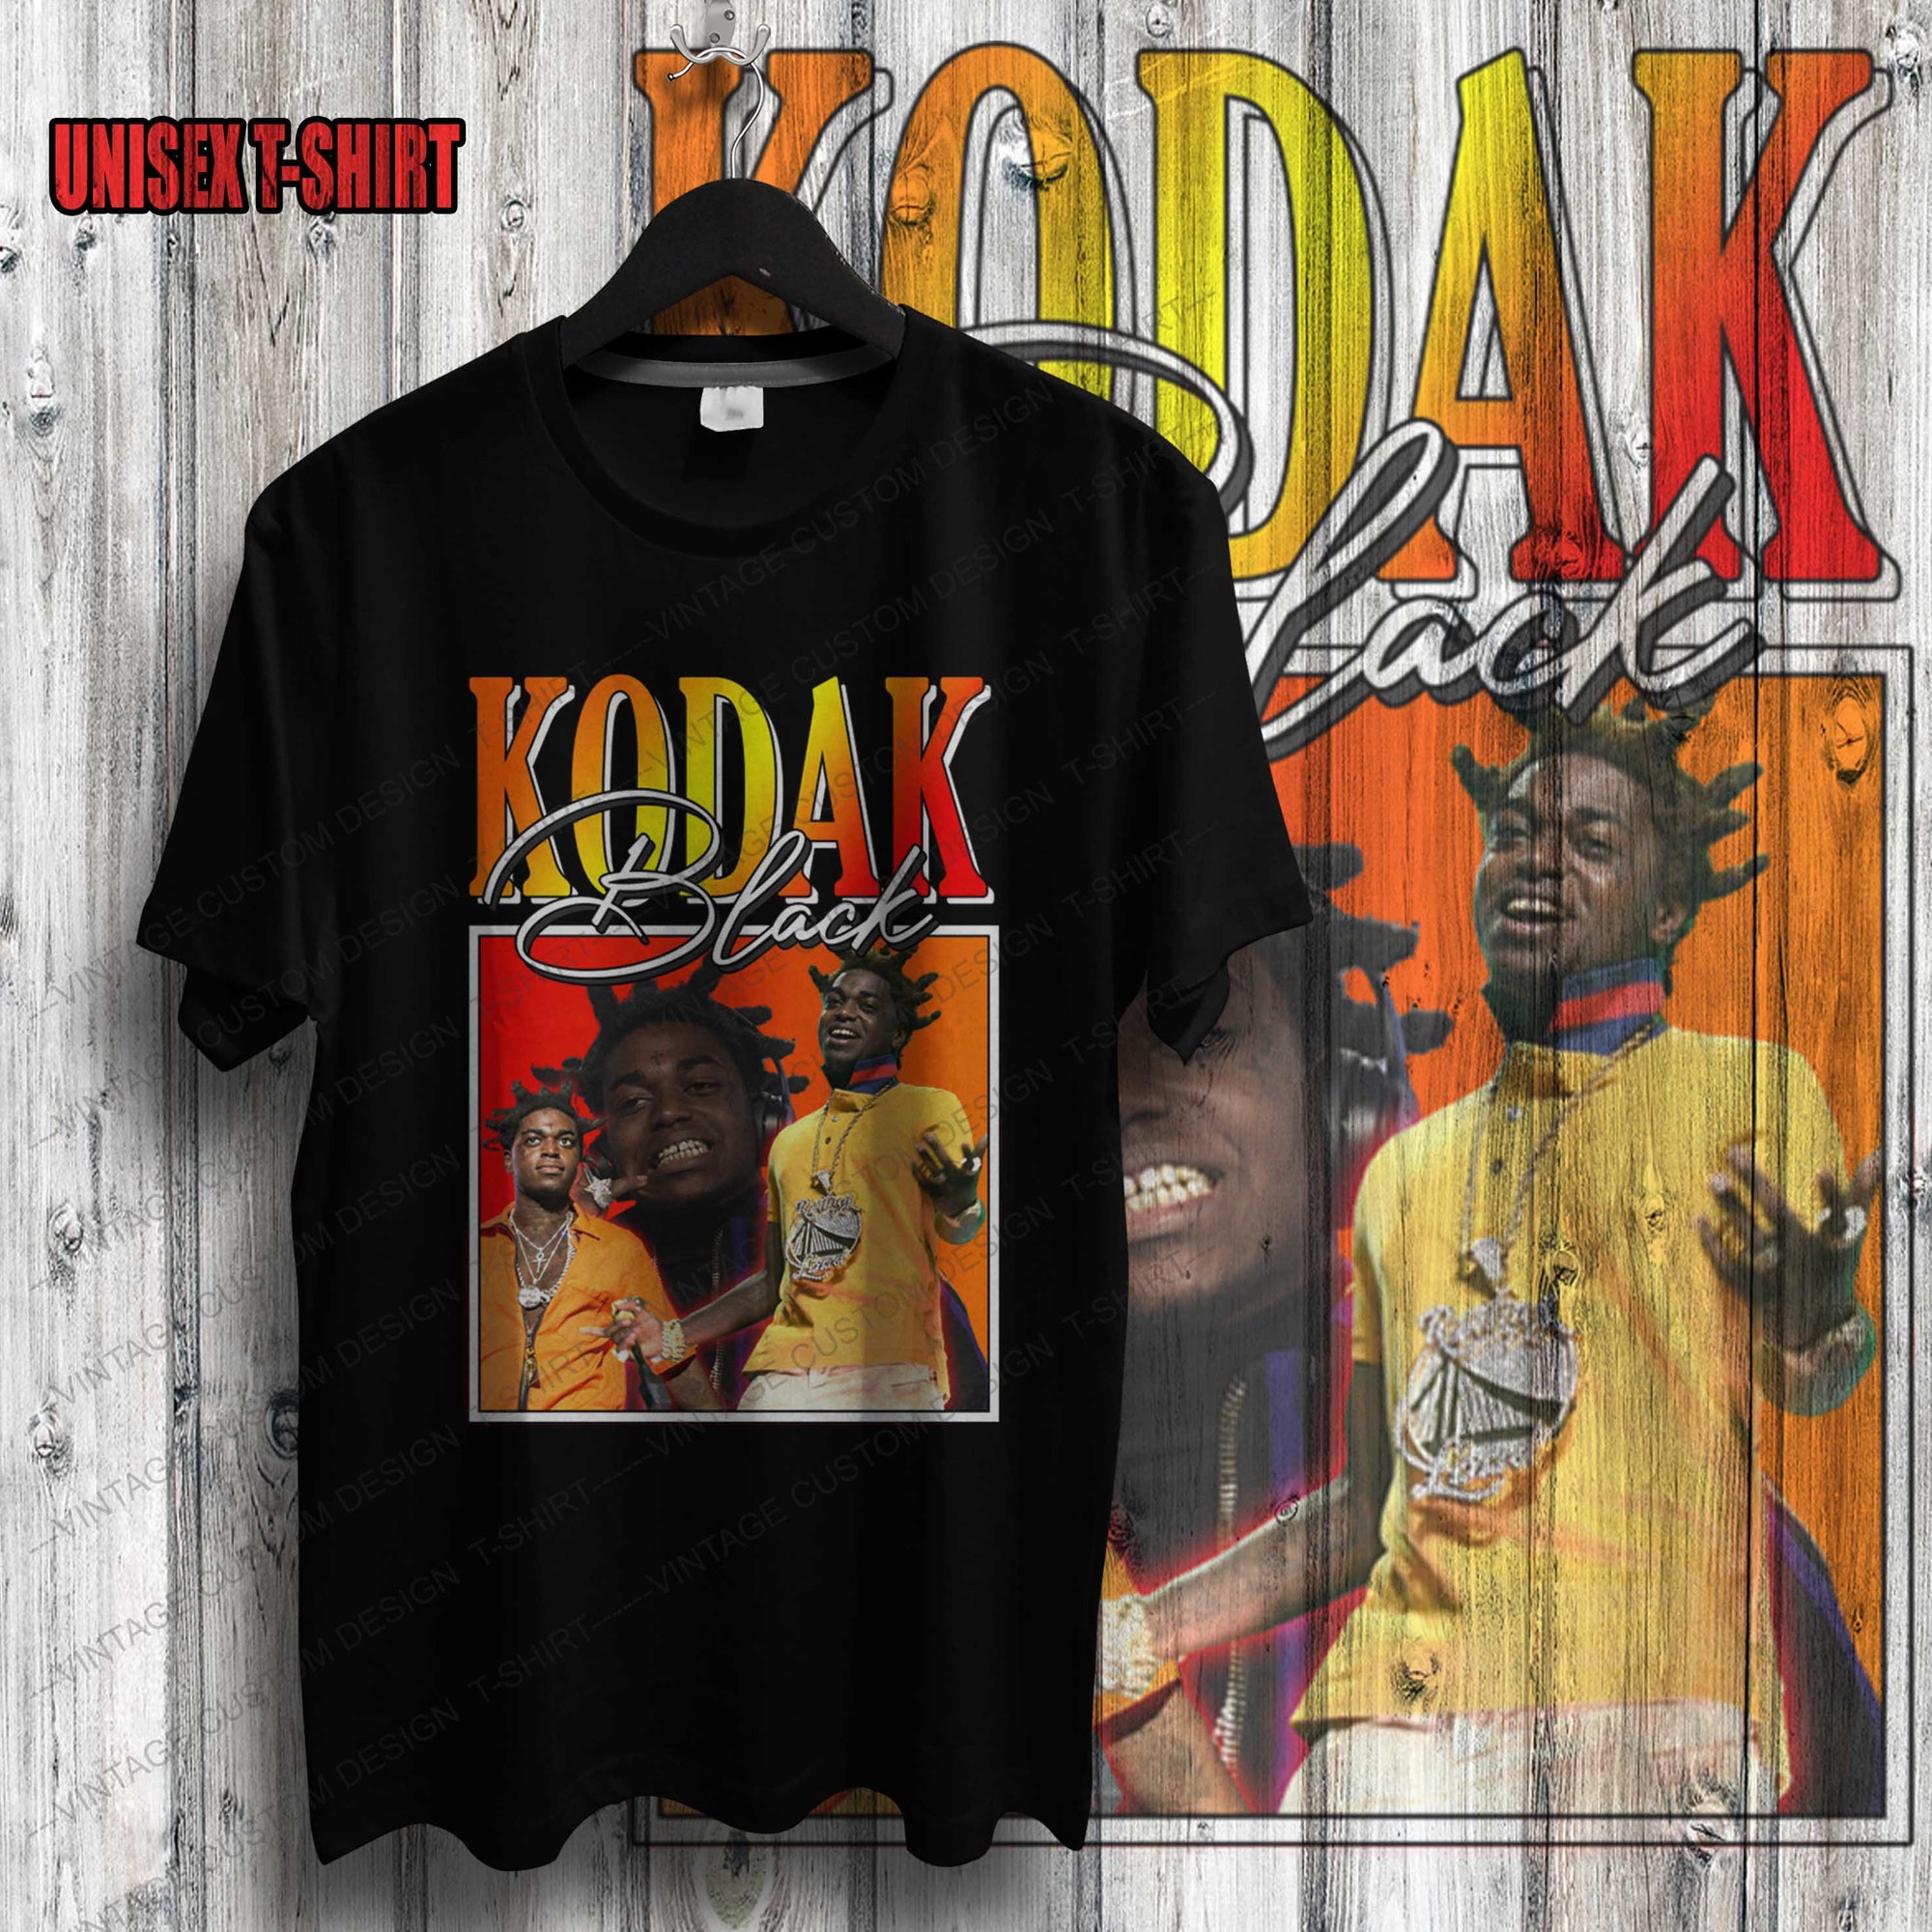 kodak black t-shirt